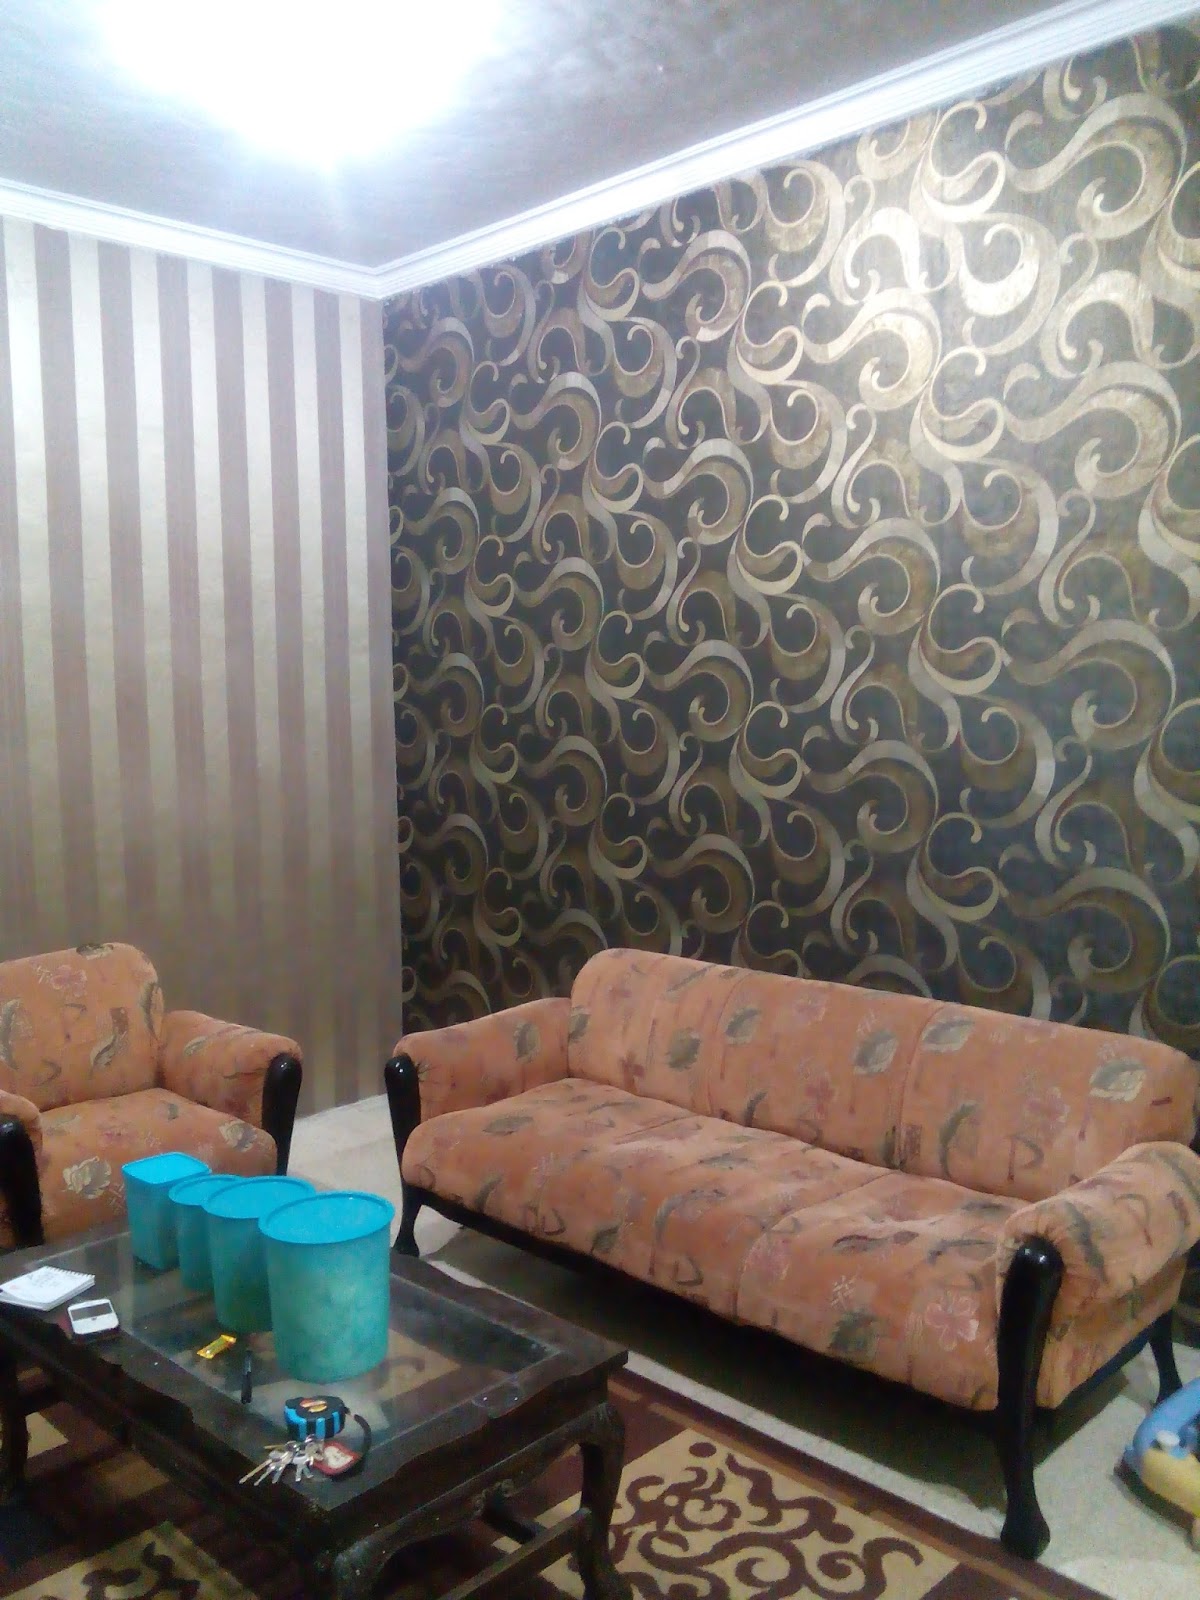 Jual Wallpaper Dinding Malang - HD Wallpaper 